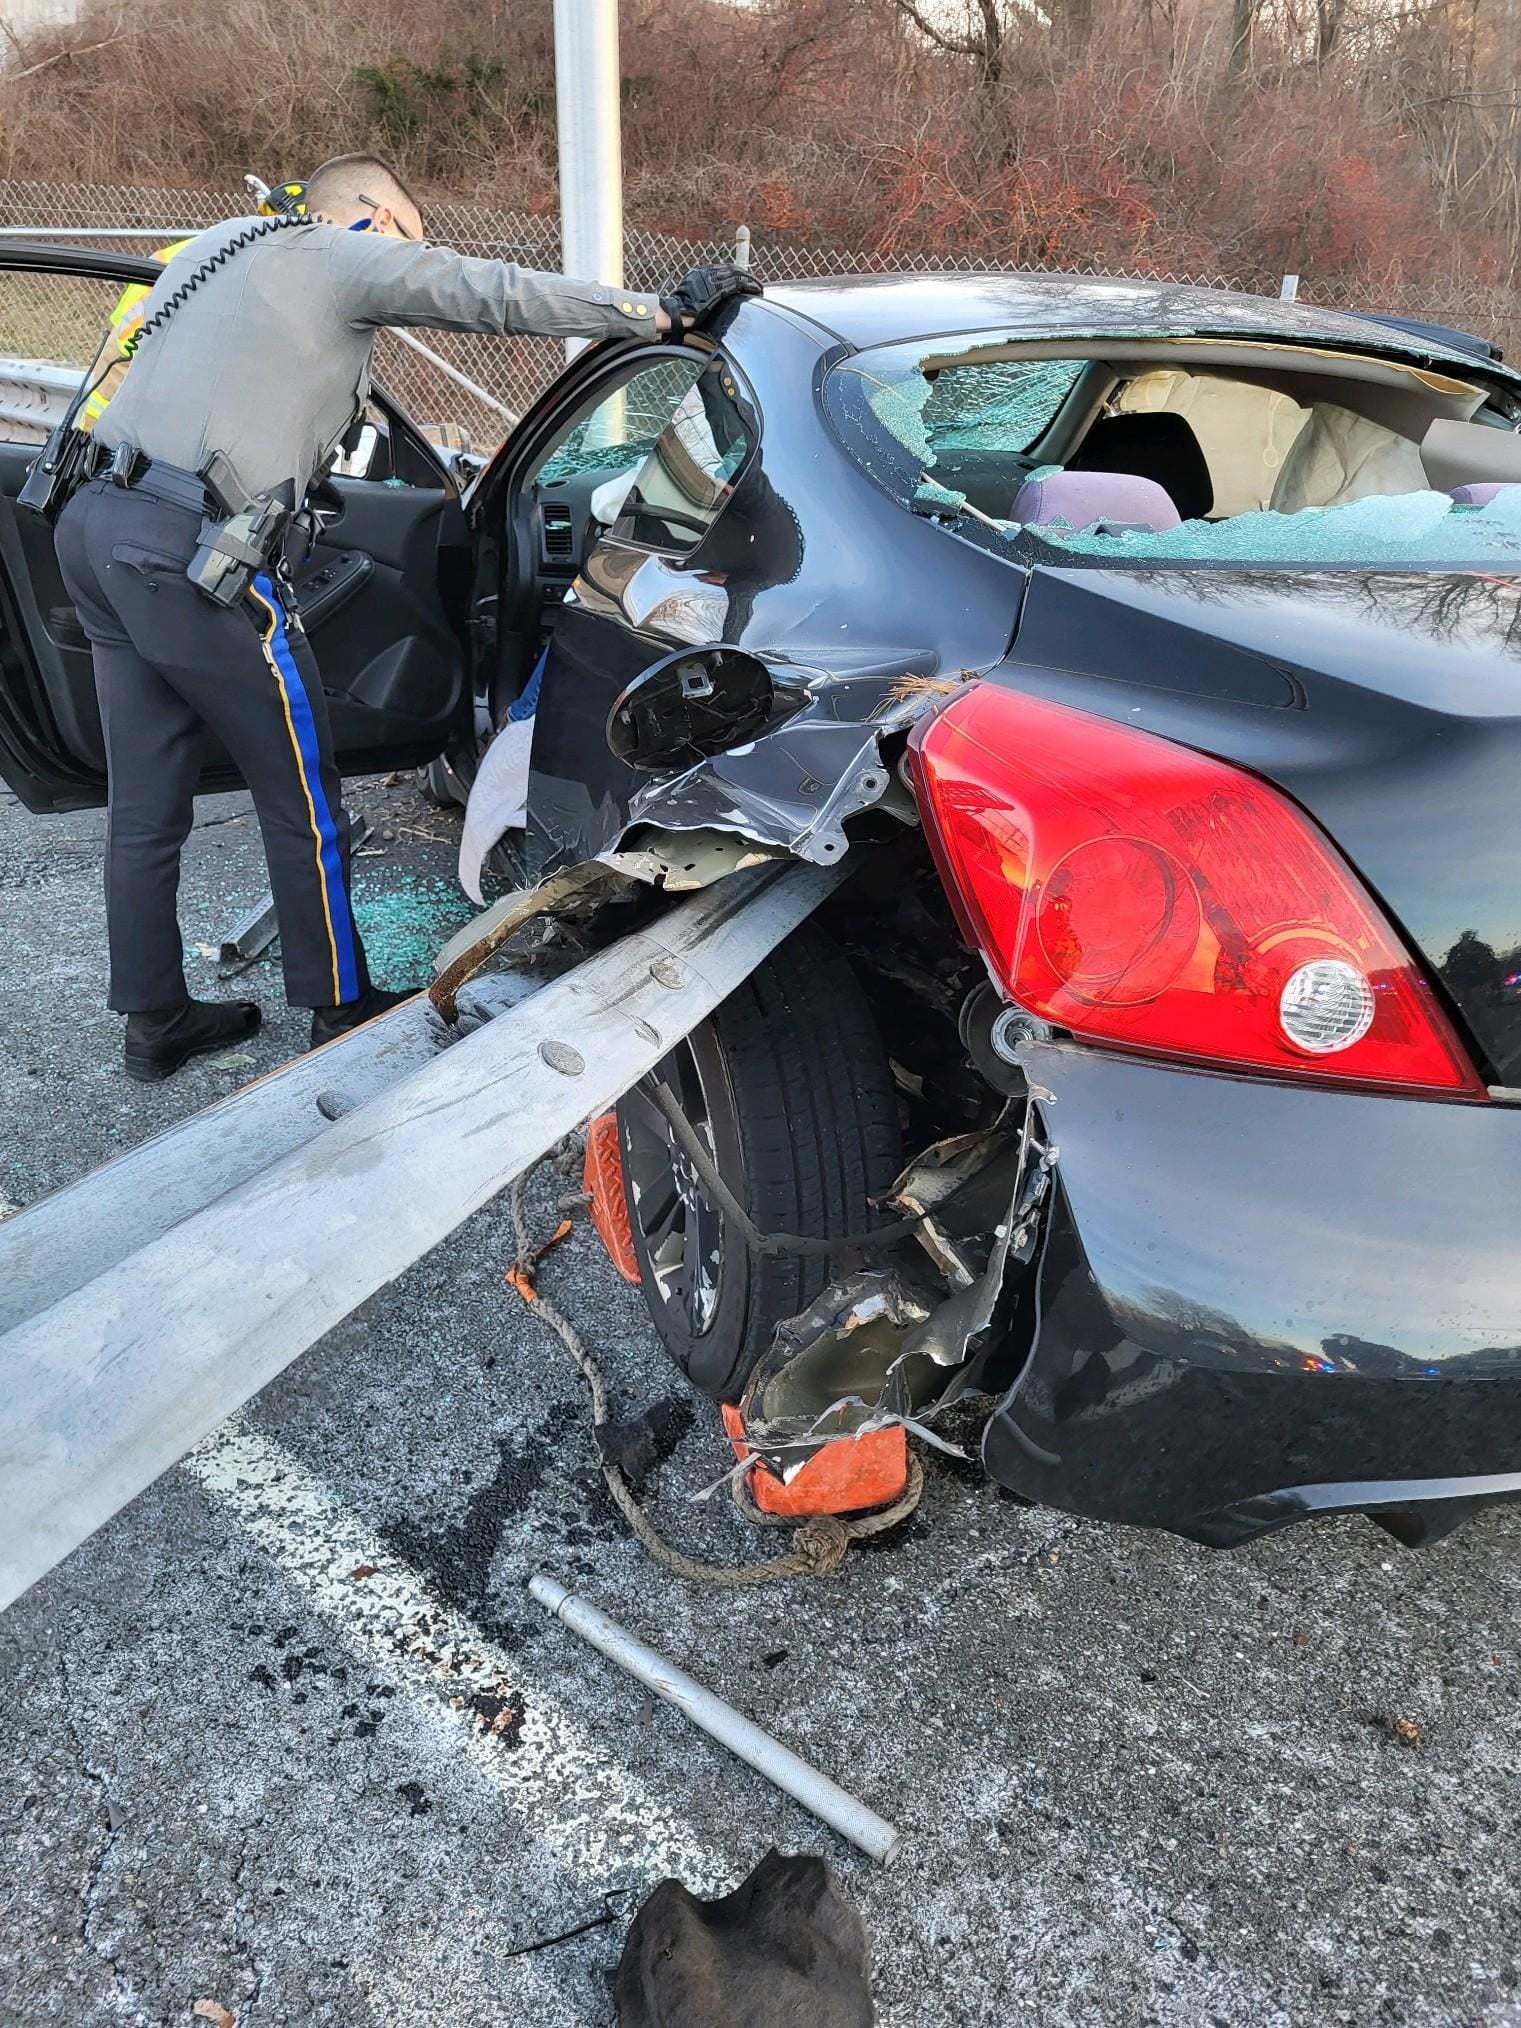 A steel guardrail impaled a car in a crash near Manchester, Connecticut